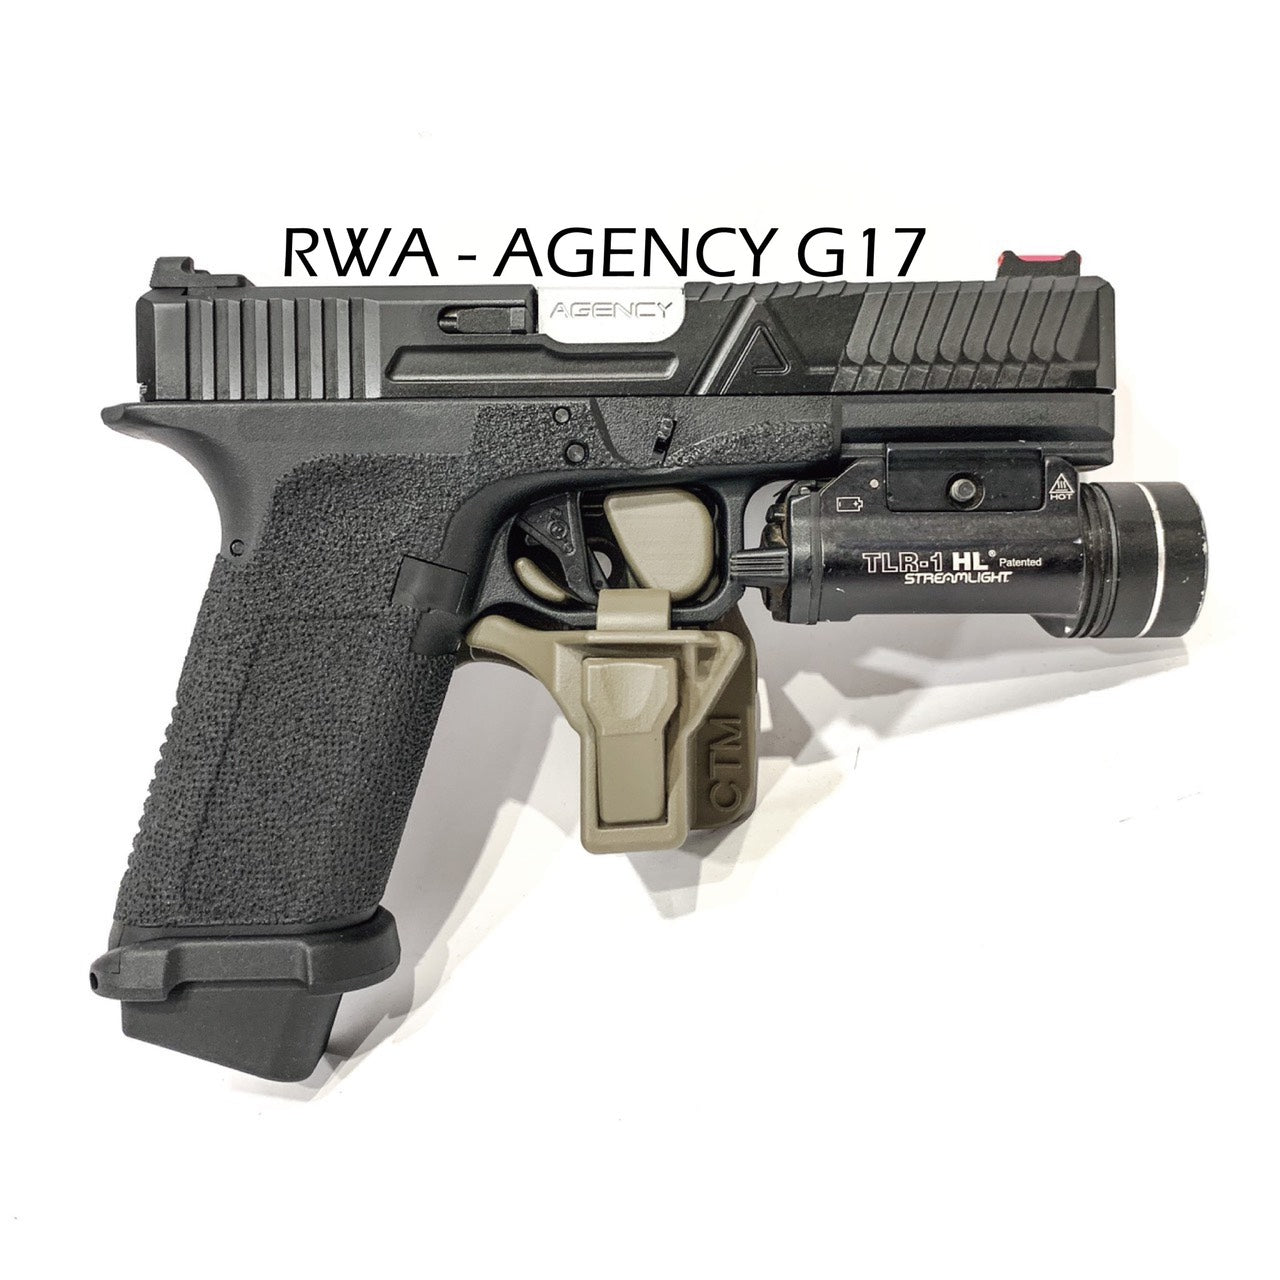 CTM - GA Holster for Glock / AAP01/C - Olive